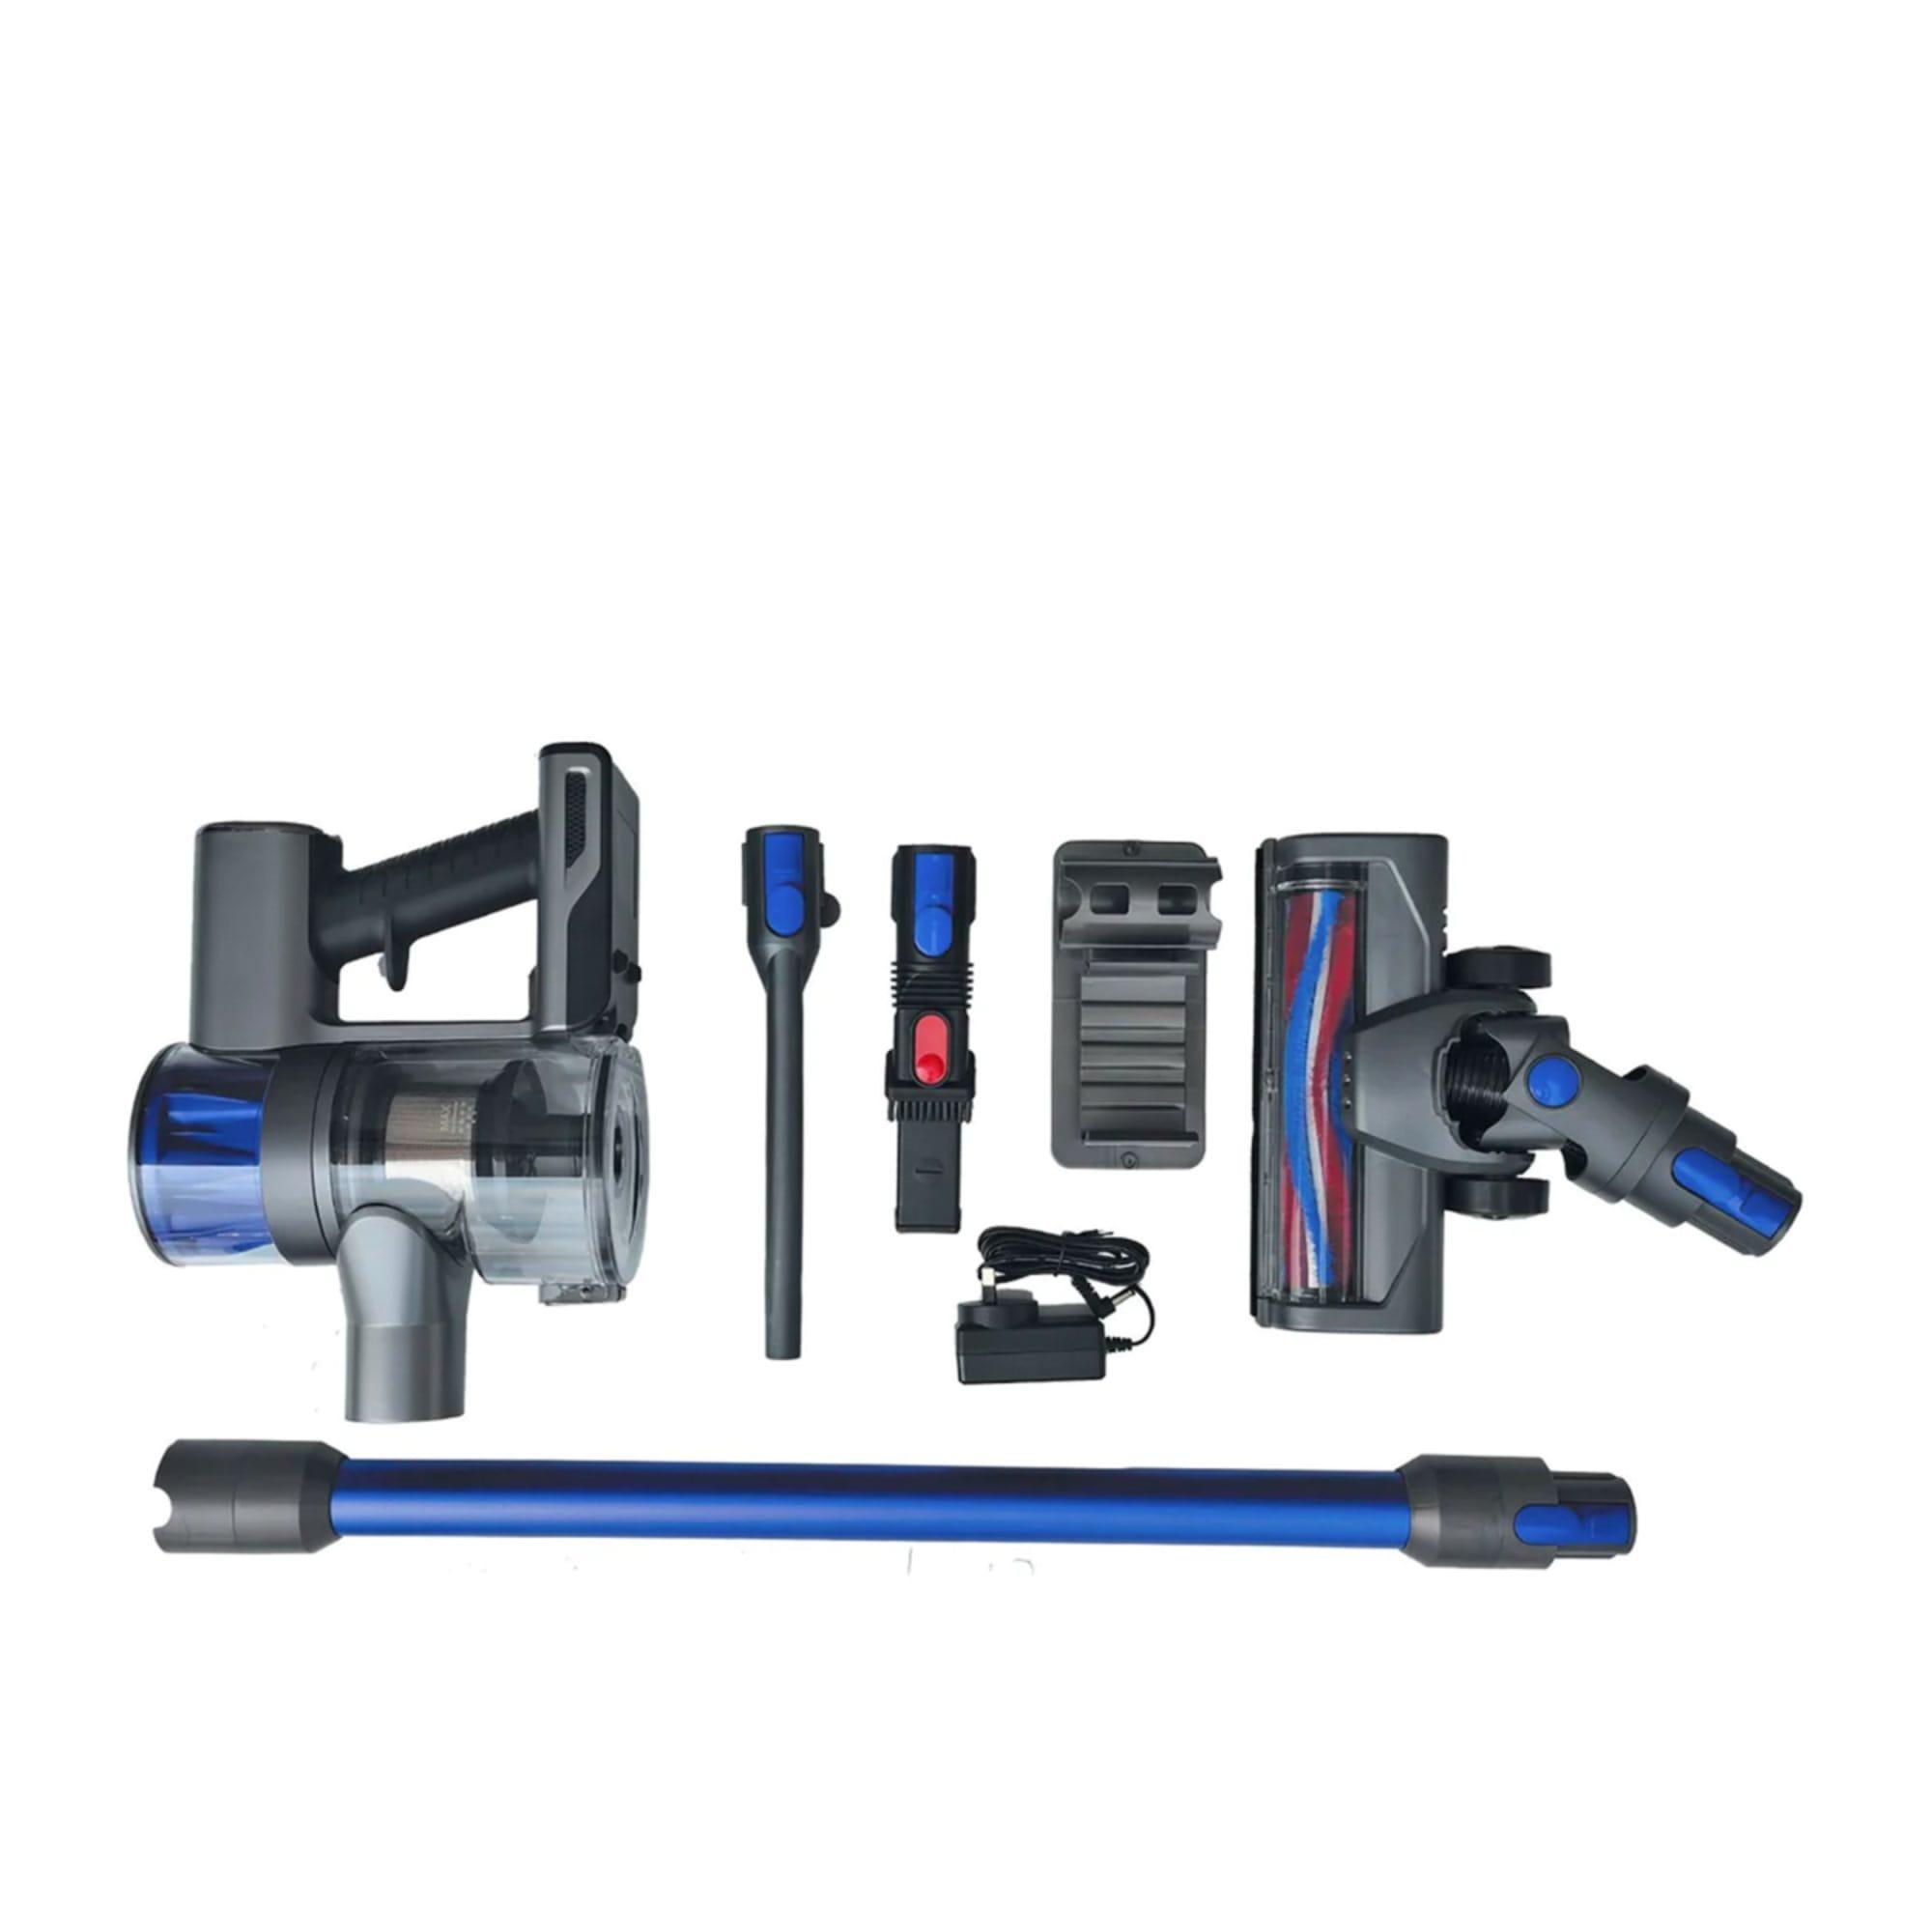 MyGenie X5 Cordless Vacuum Cleaner Blue Image 4